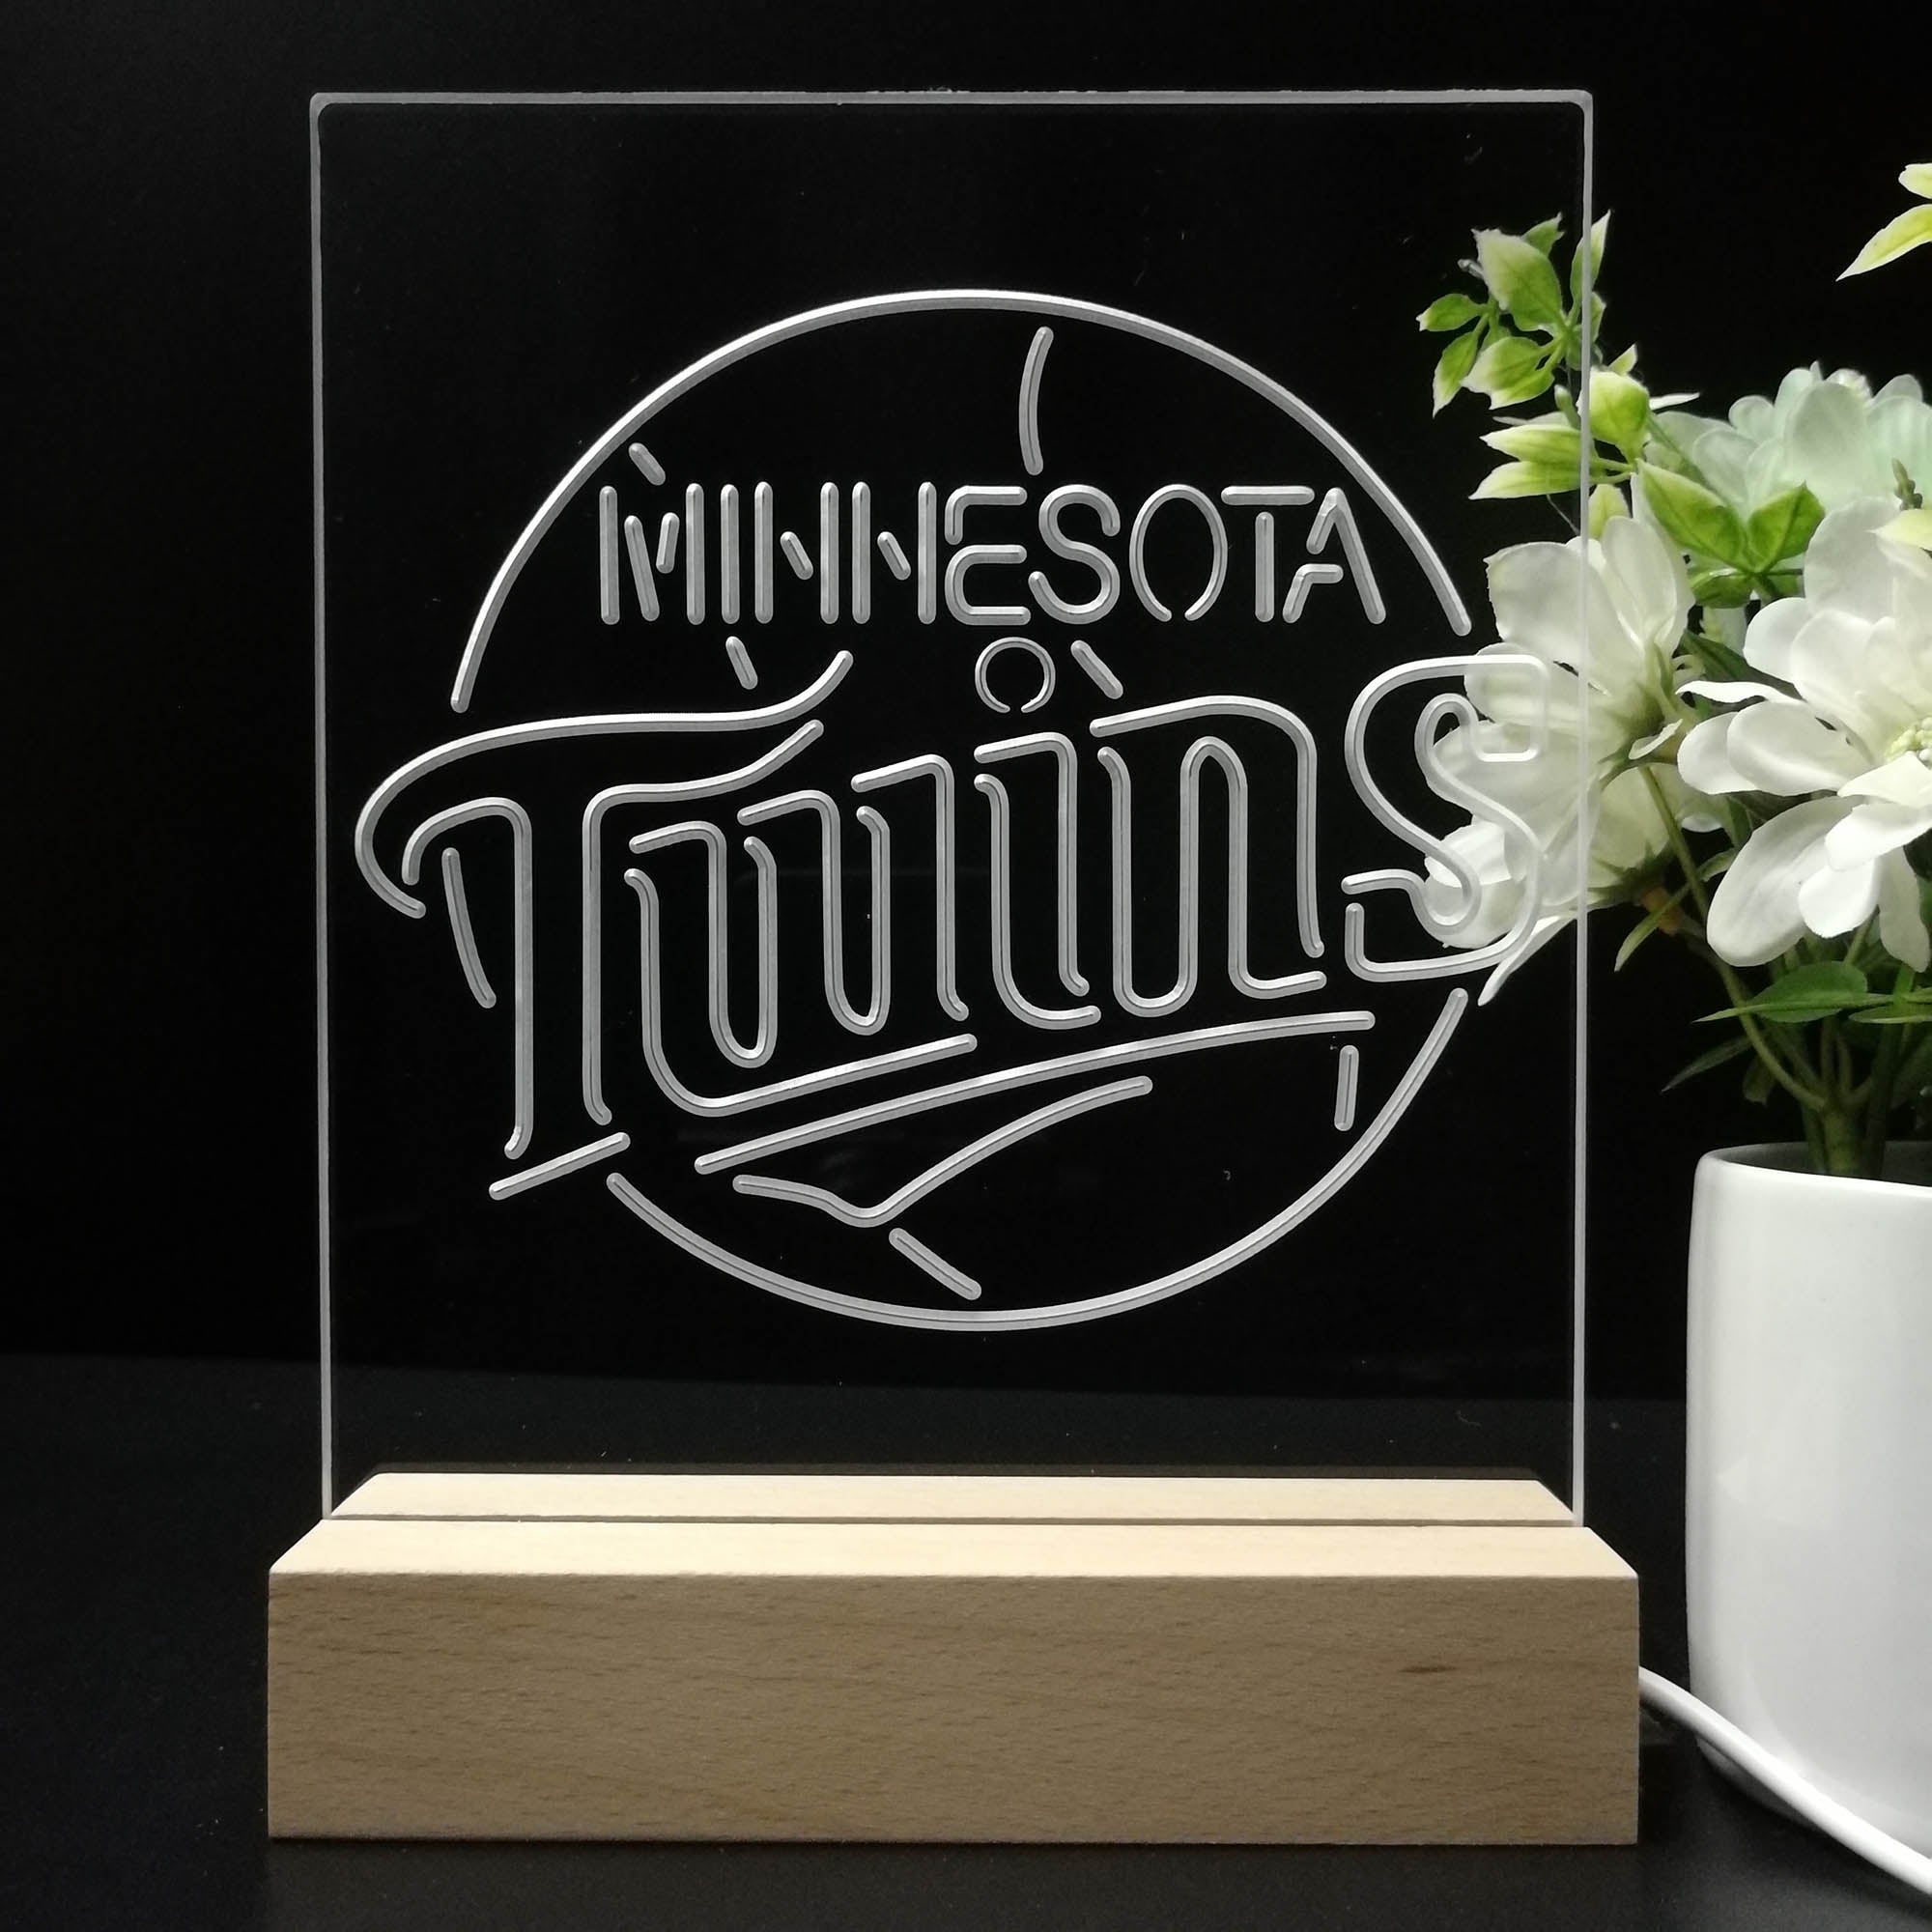 Minnesota Twins Neon Sign Table Top Lamp